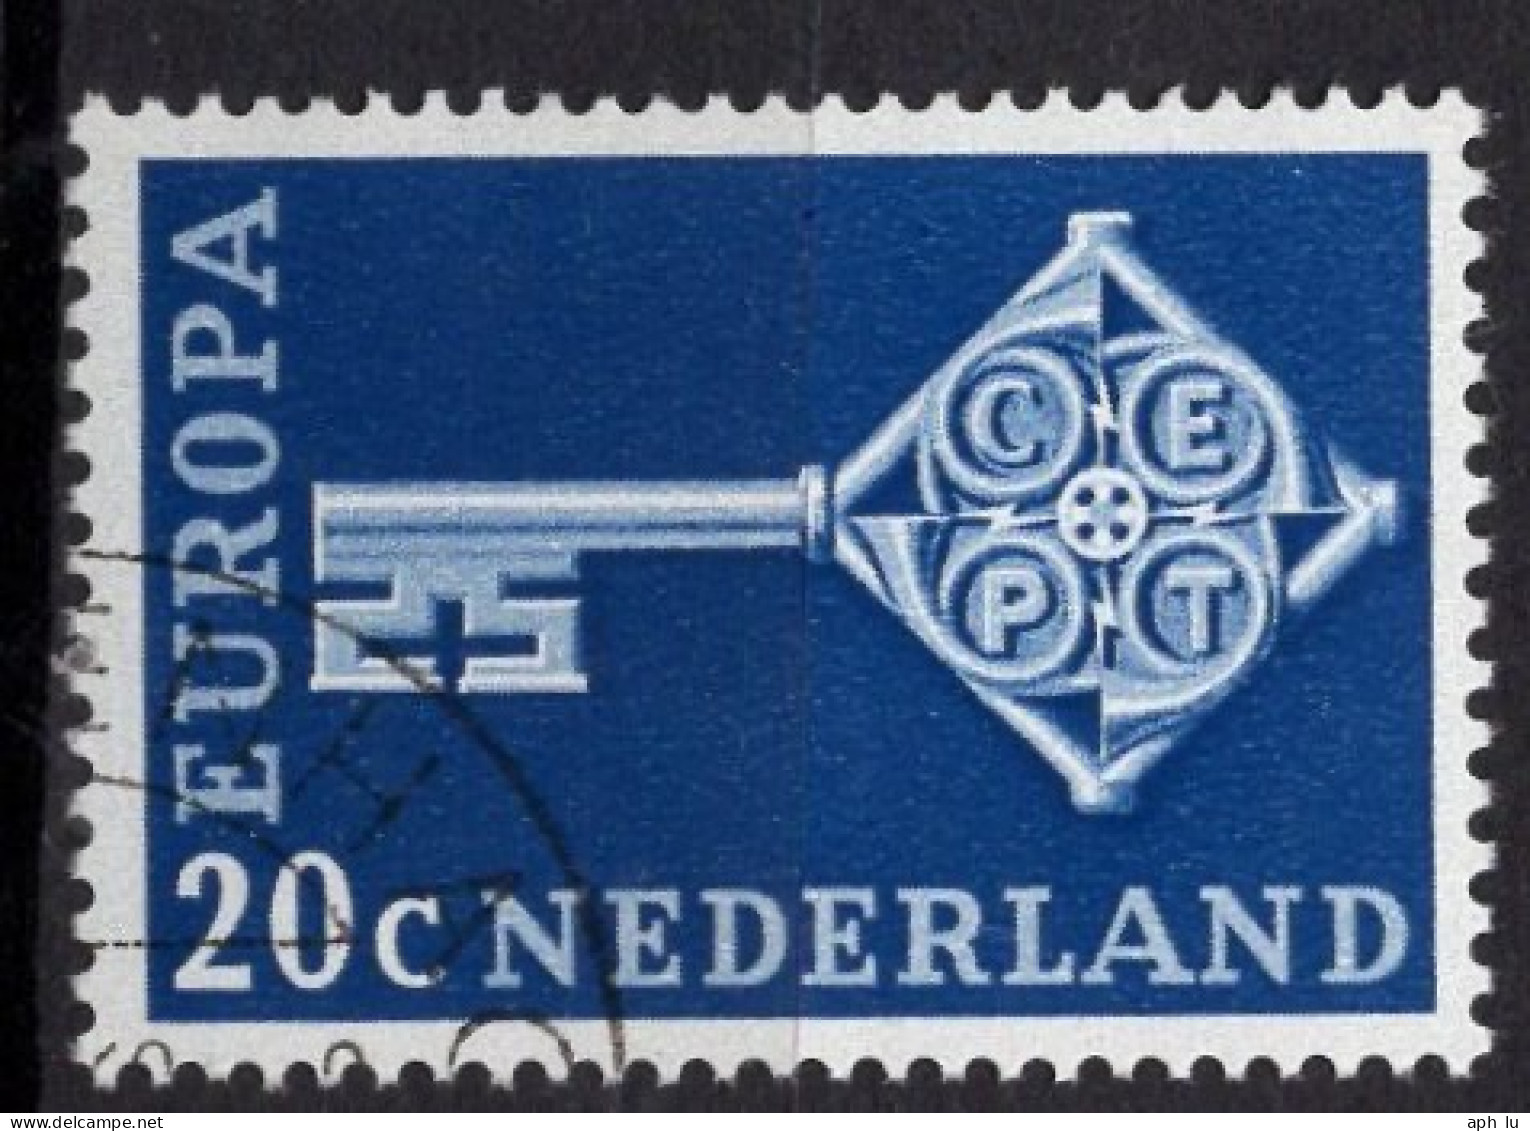 Marke 1968 Gestempelt (h340501) - Oblitérés